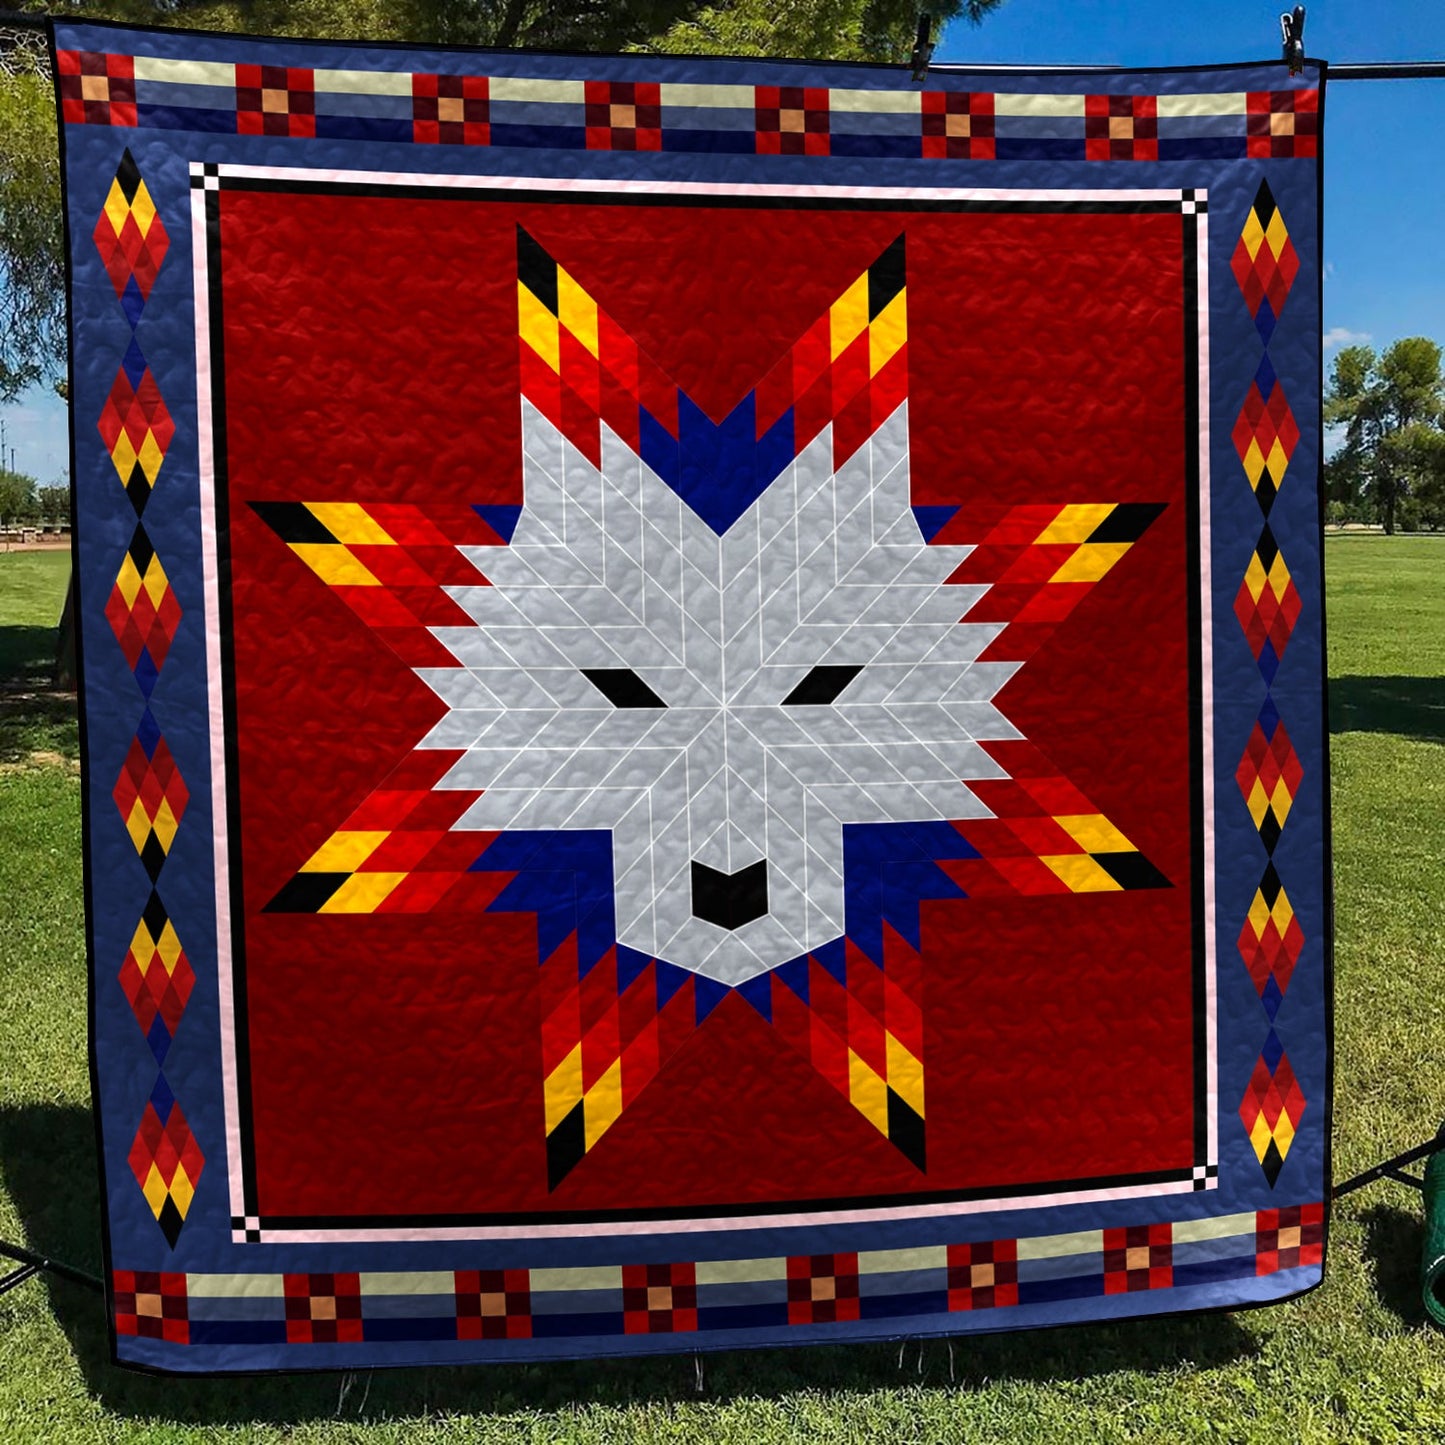 Native American Inspired Star Art Quilt HM08082301BL